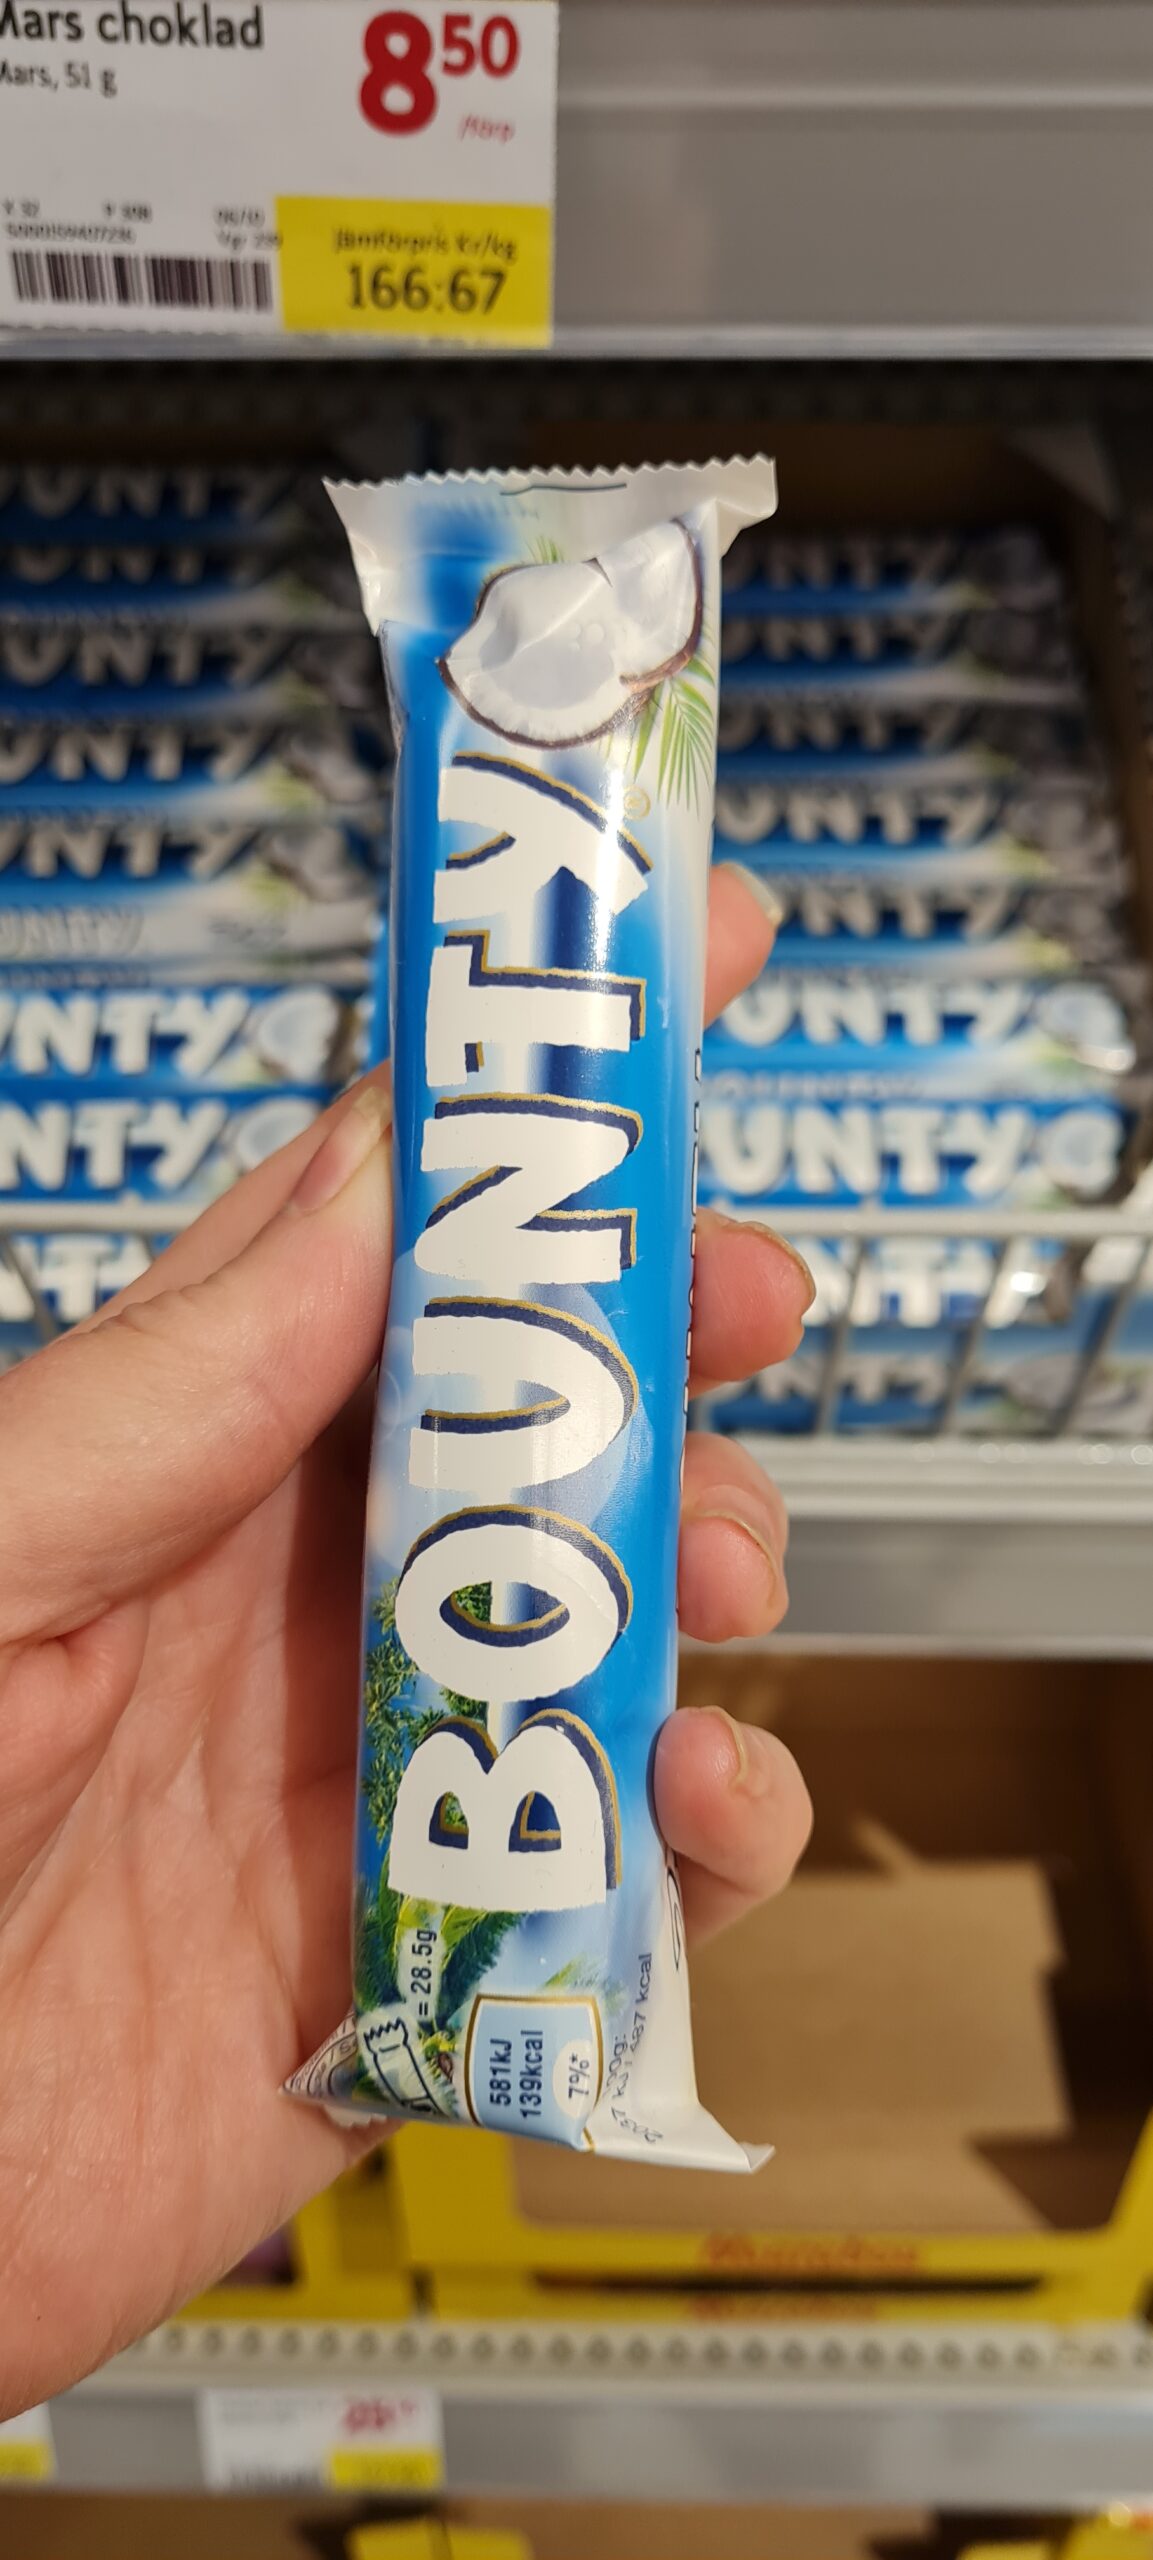 Bounty choklad